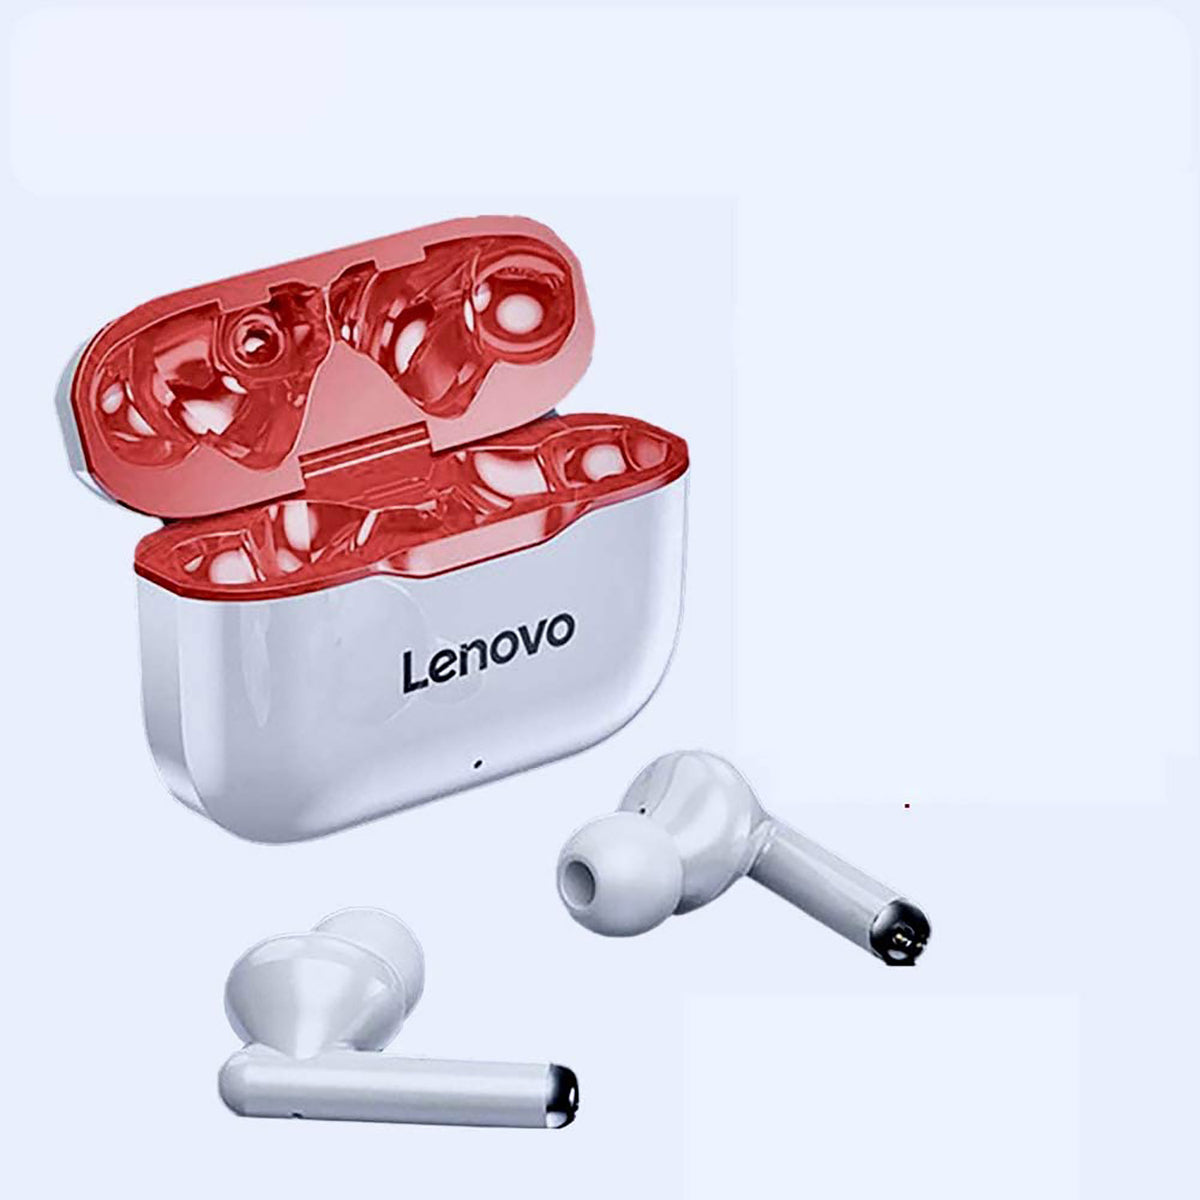 Lenovo LP1 Bluetooth headphones white with red trim